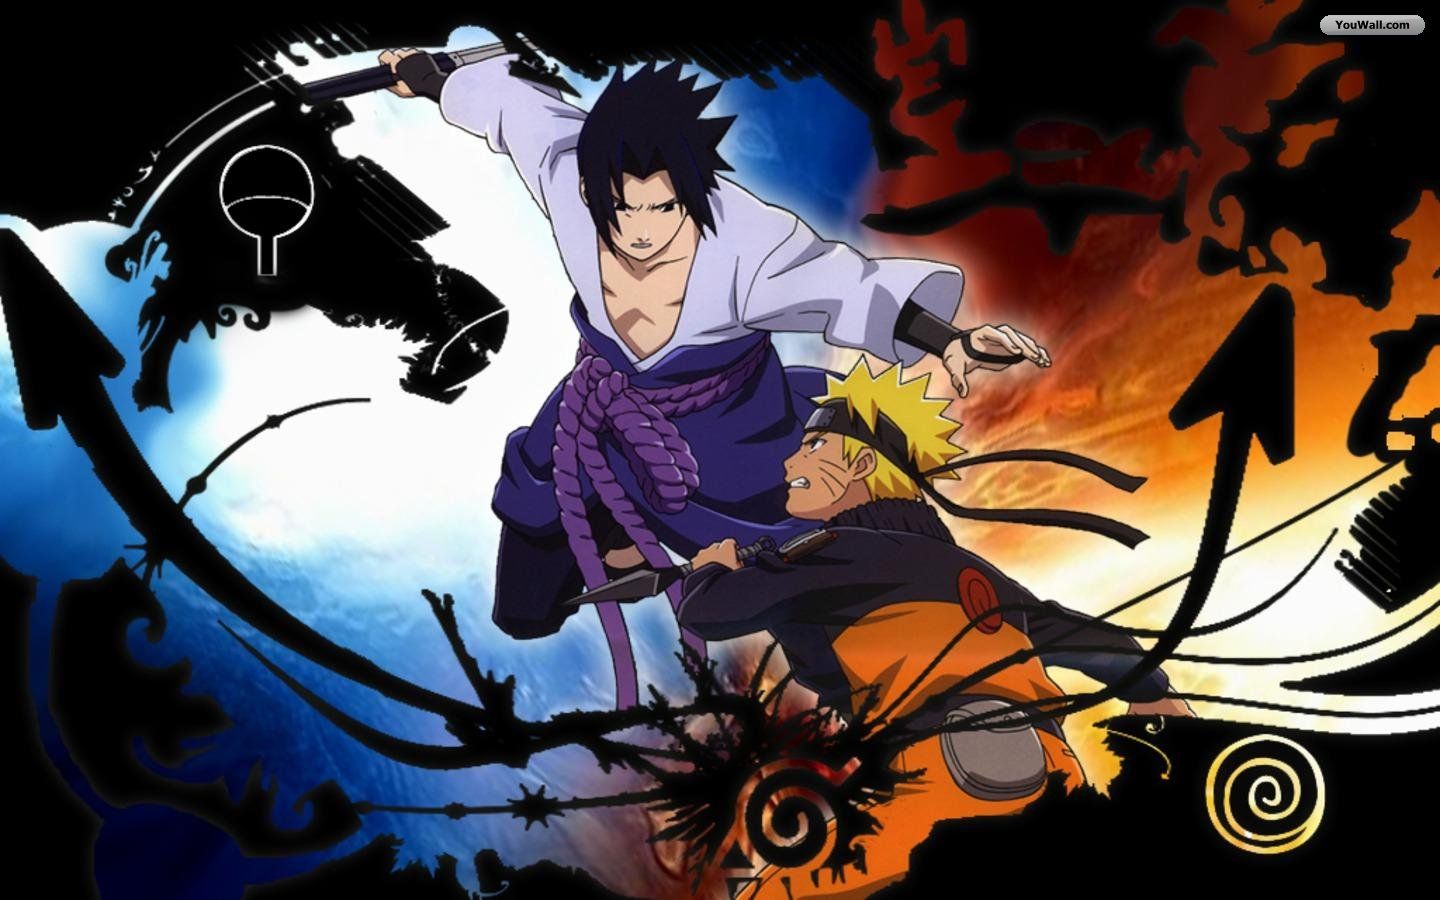 Free download Kiba16 image Sasuke vs Naruto HD wallpaper